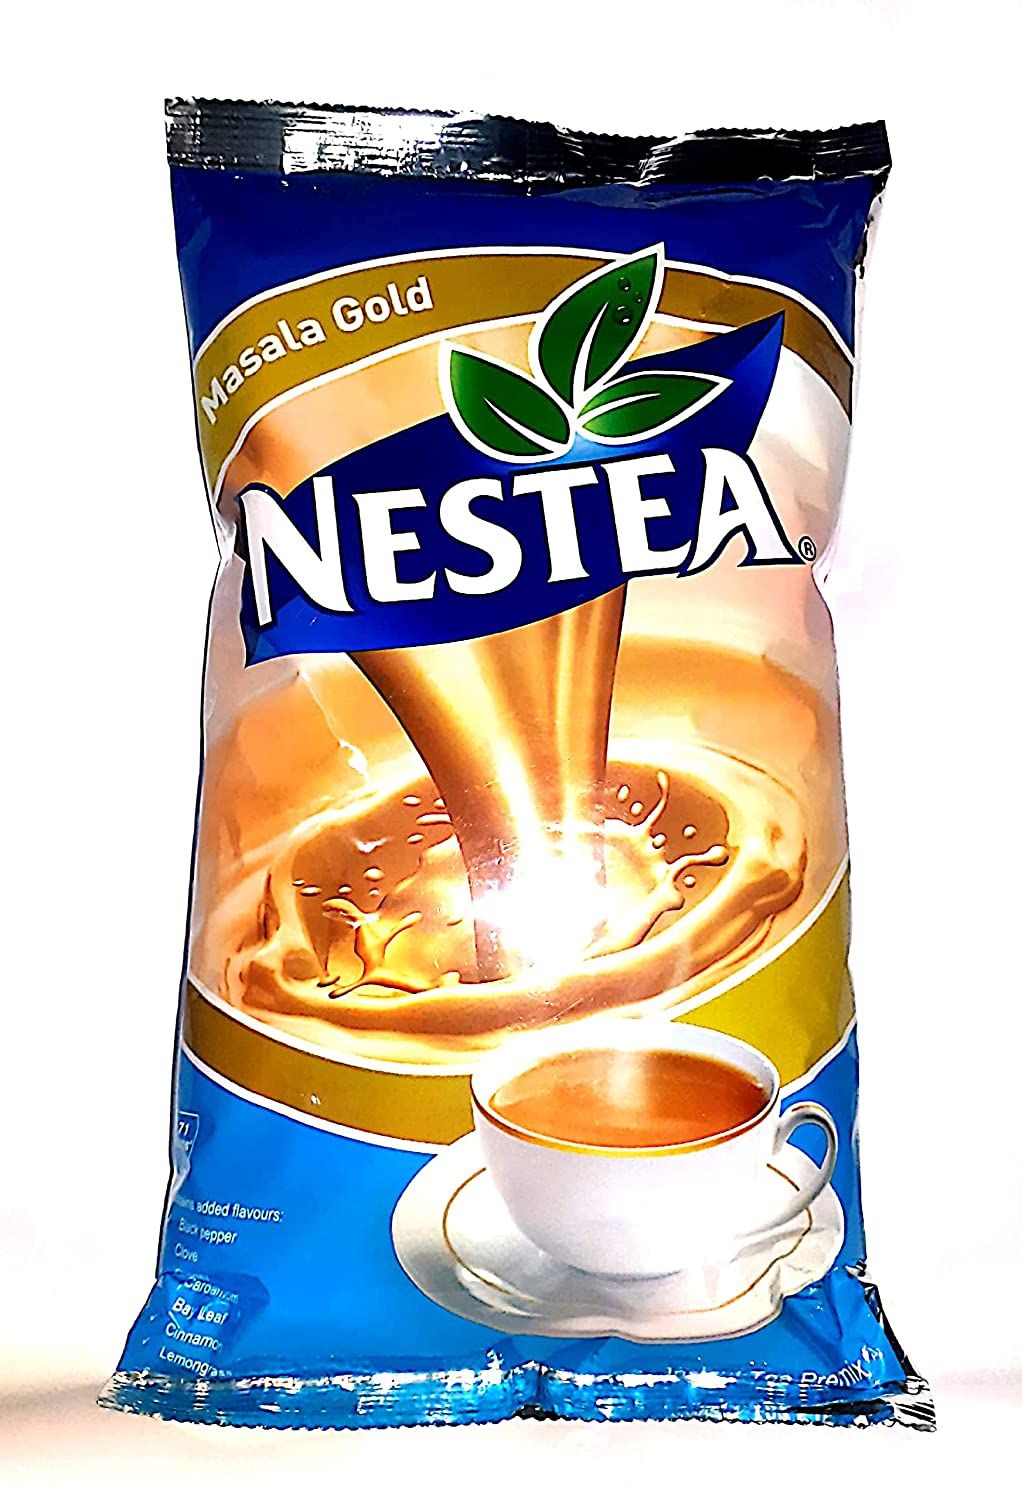 Nestle Nestea Masala Gold Tea Premix Image